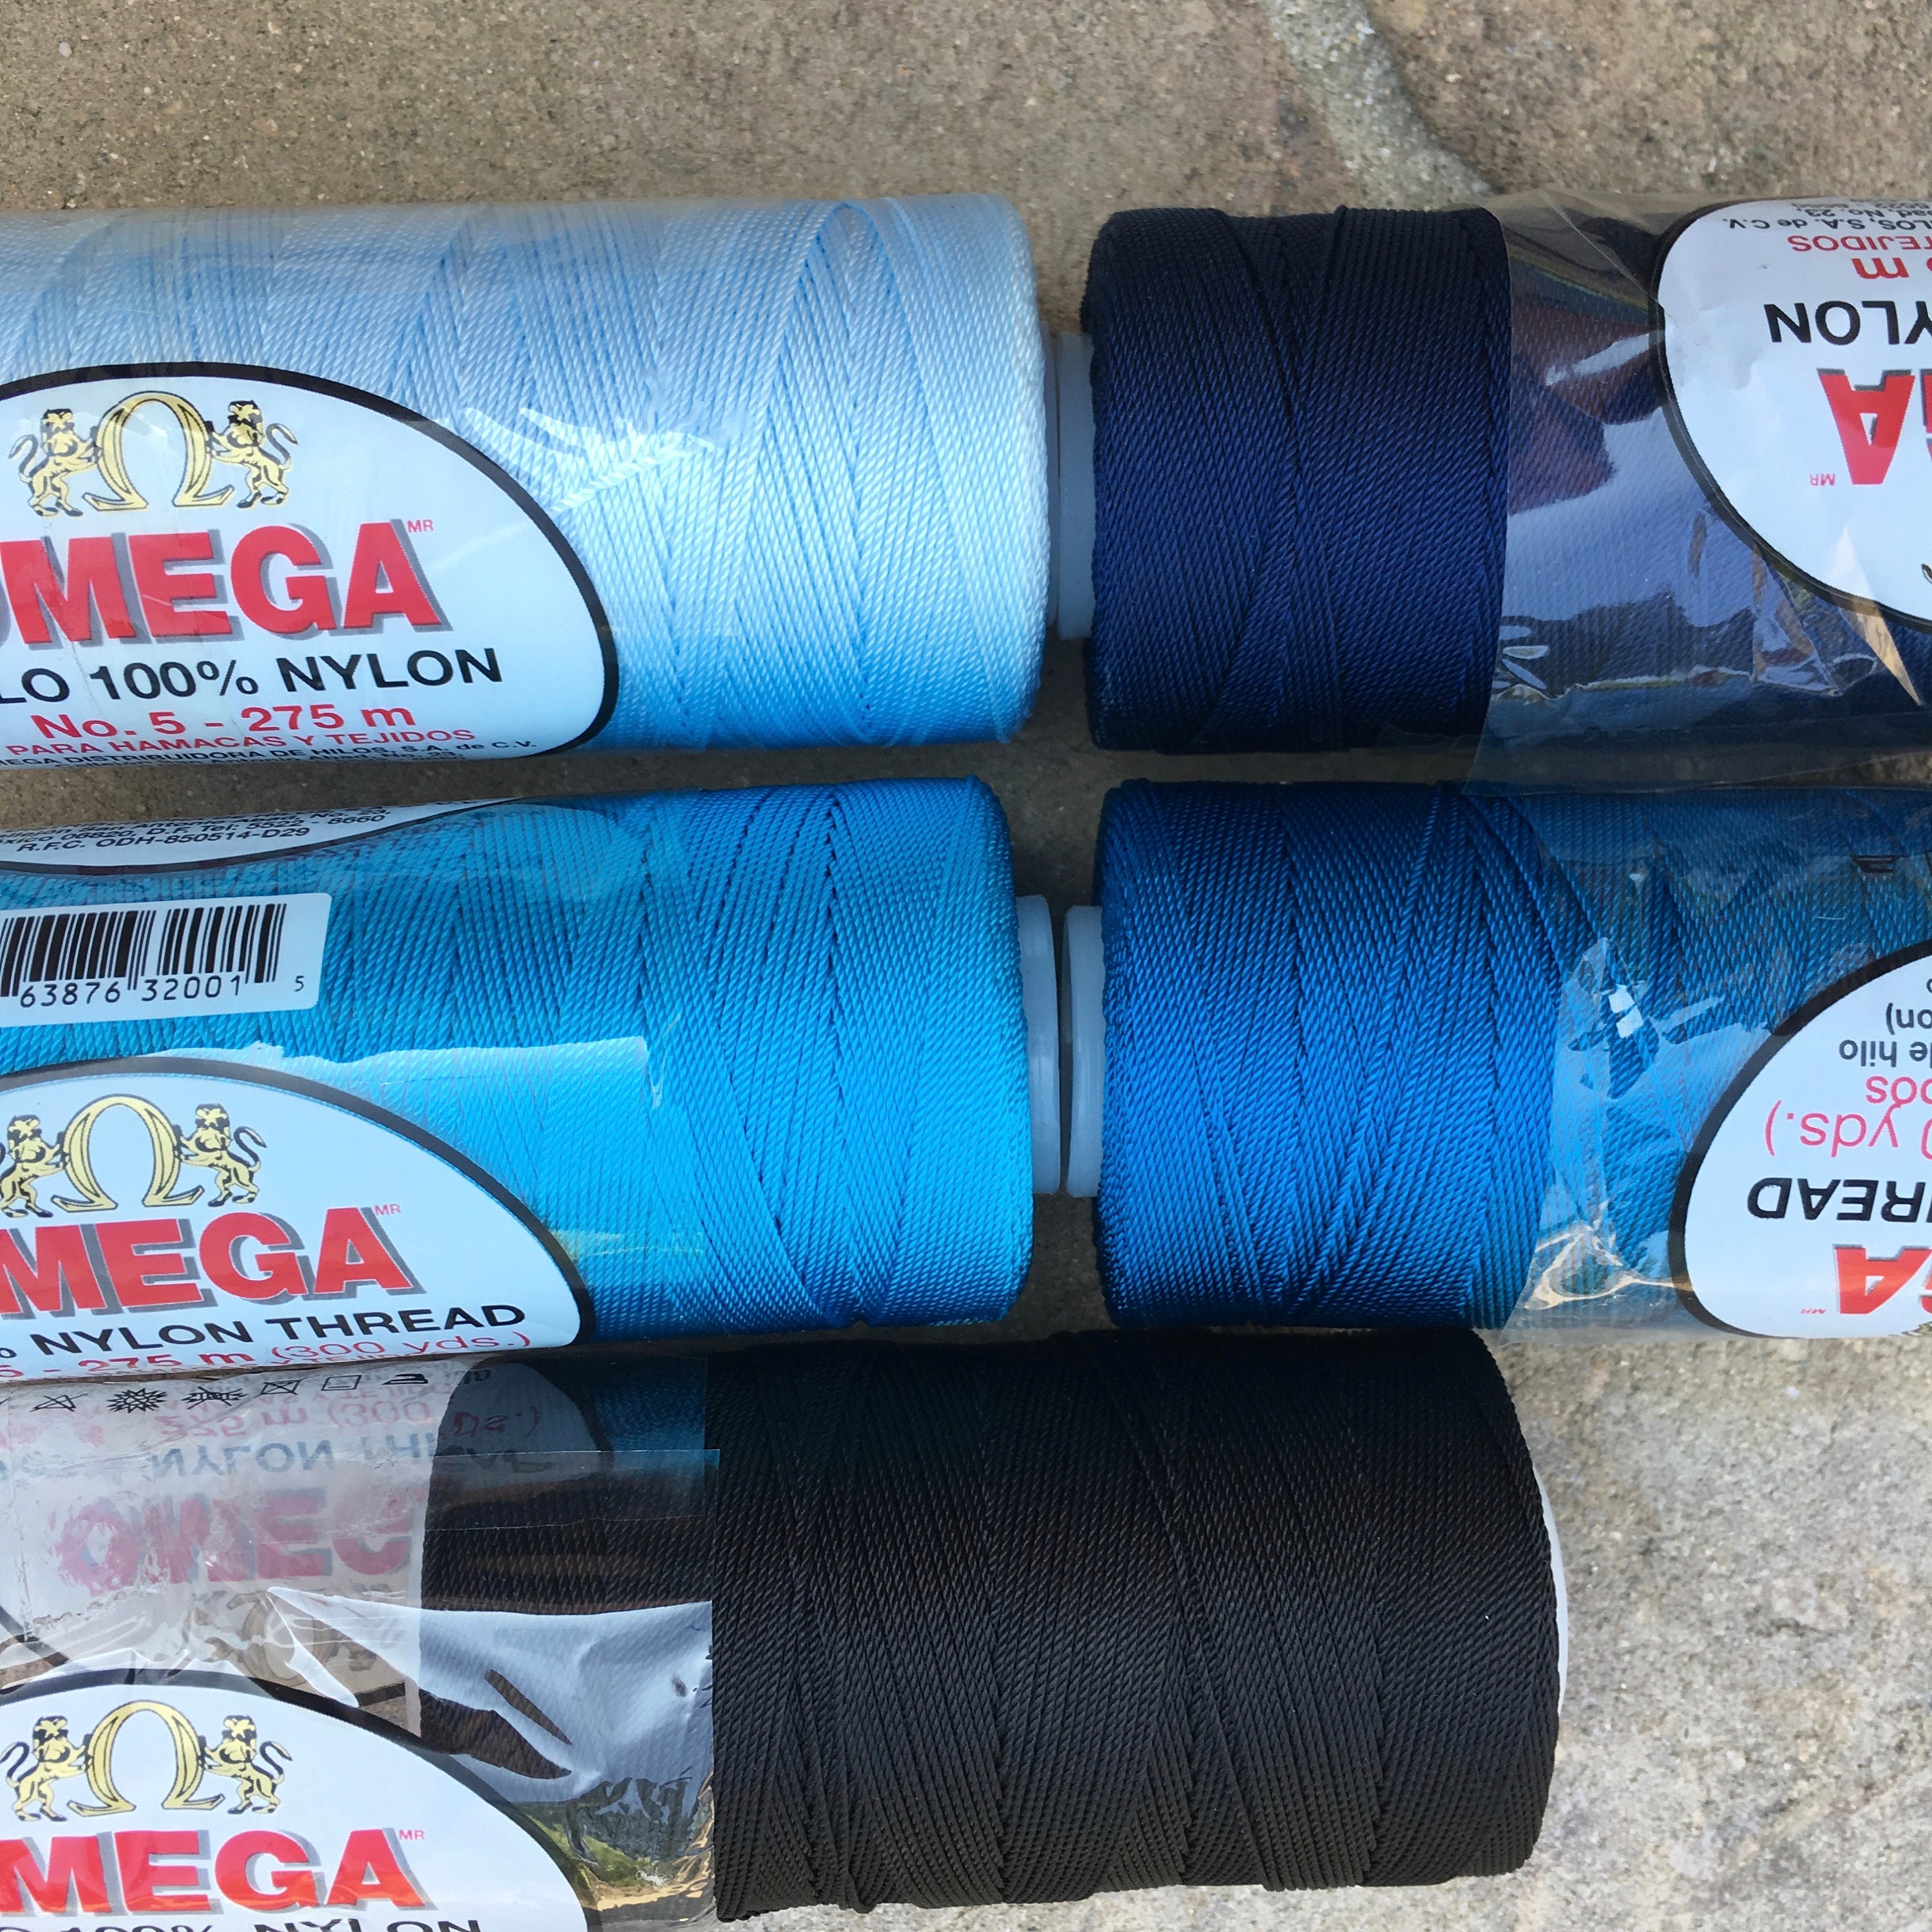 Omega Hilo Nylon No. 5 Thread for Crafts & Jewelry, Blue Black